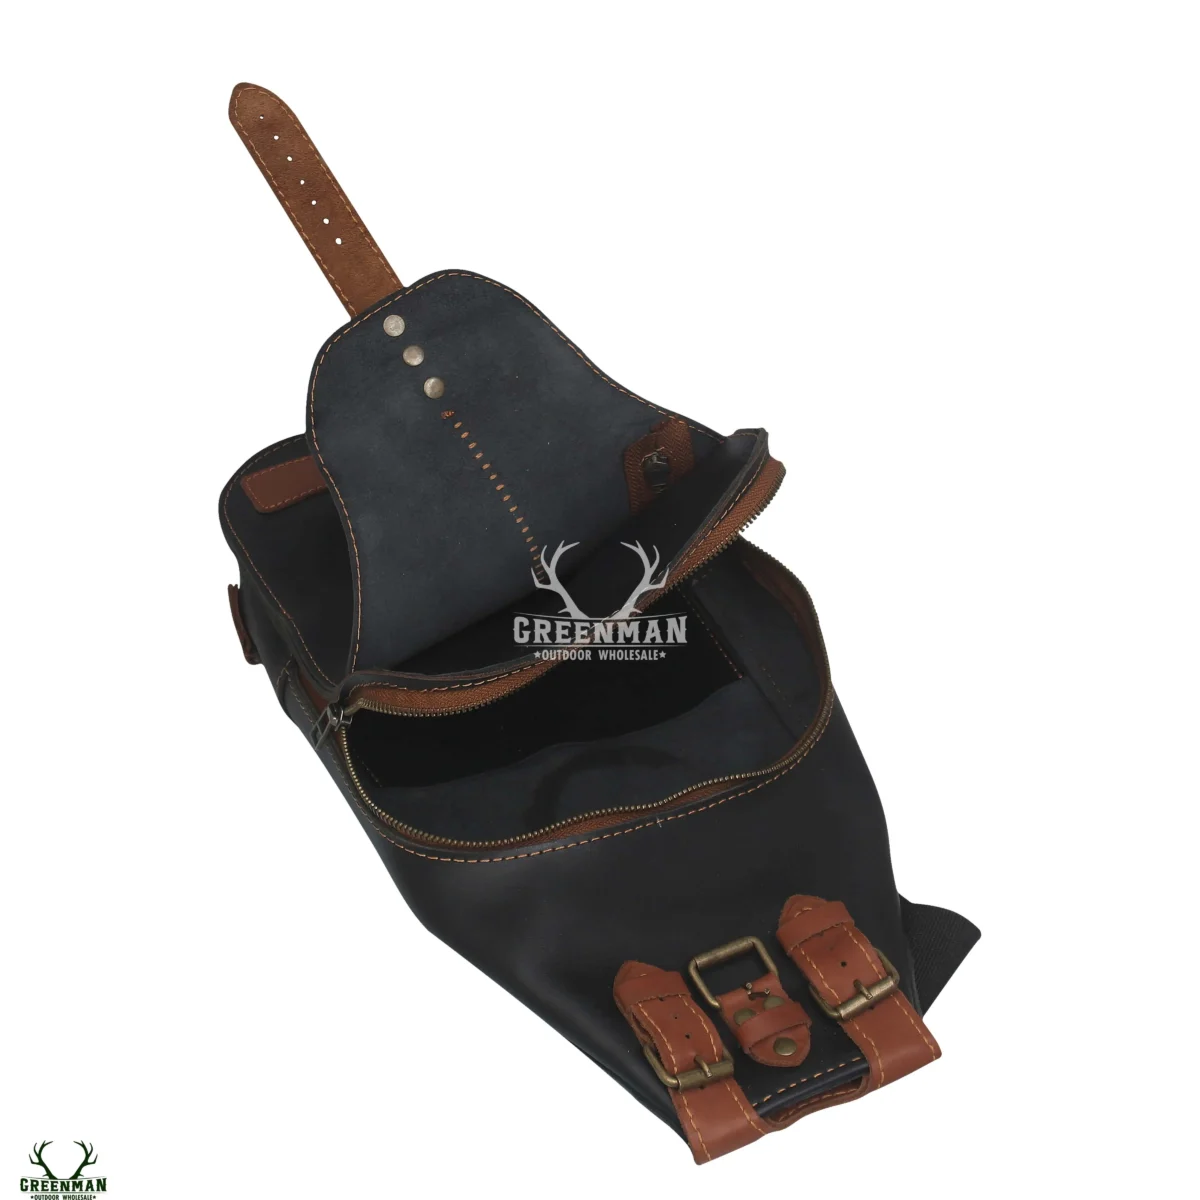 Leather Sling Bag, Leather Crossbody Bag